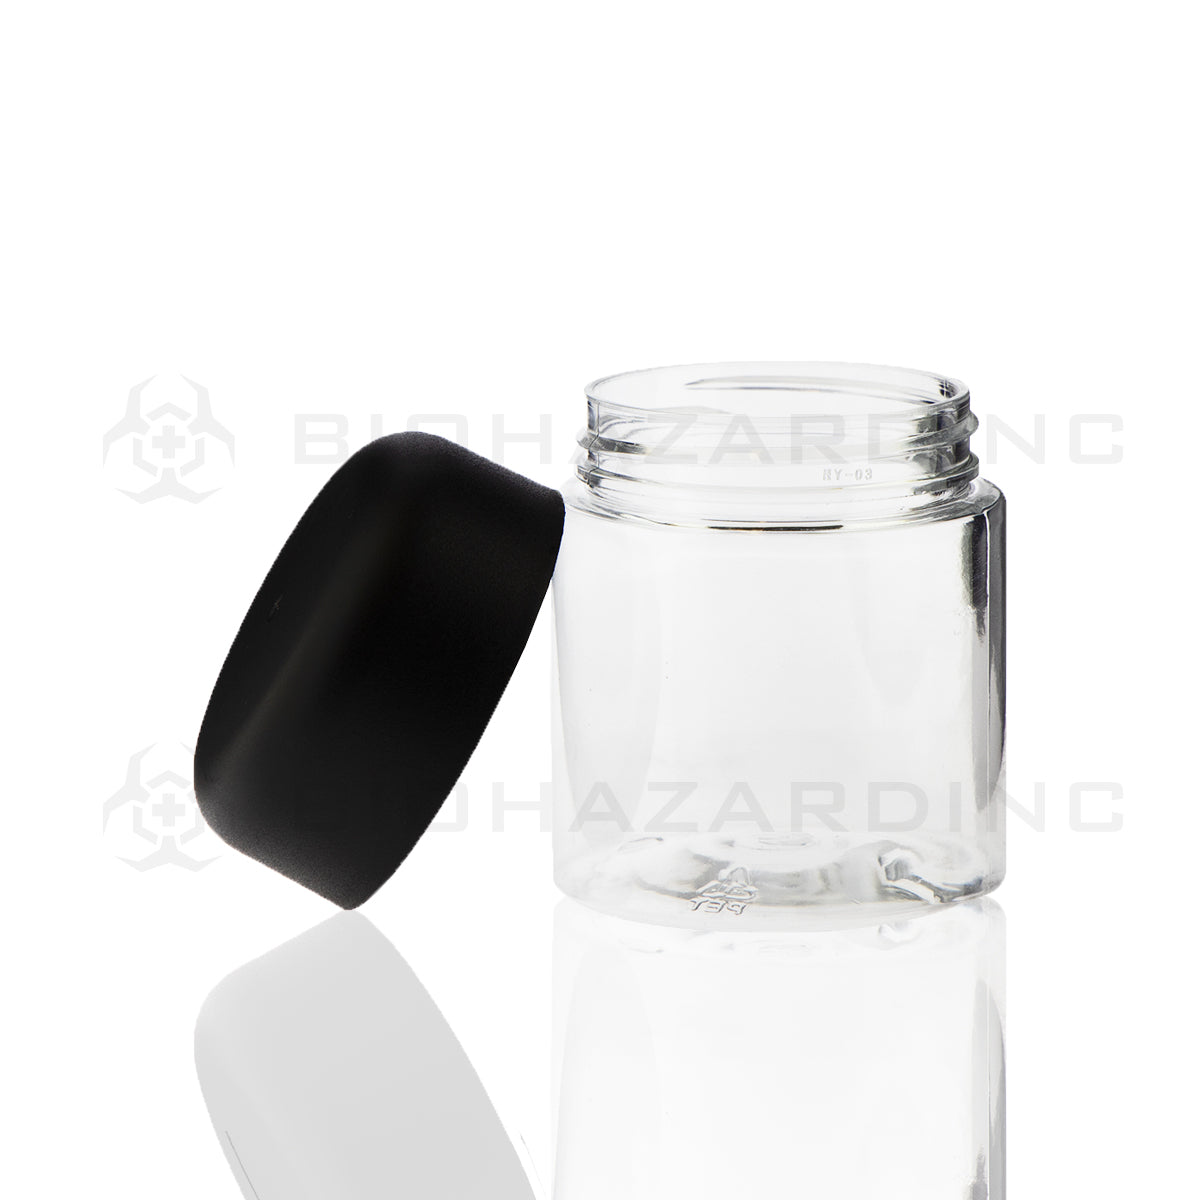 Child Resistant | Clear Plastic Jars w/ Black Dome Caps | 4oz - Clear/Black - 100 Count Child Resistant Jar Biohazard Inc   